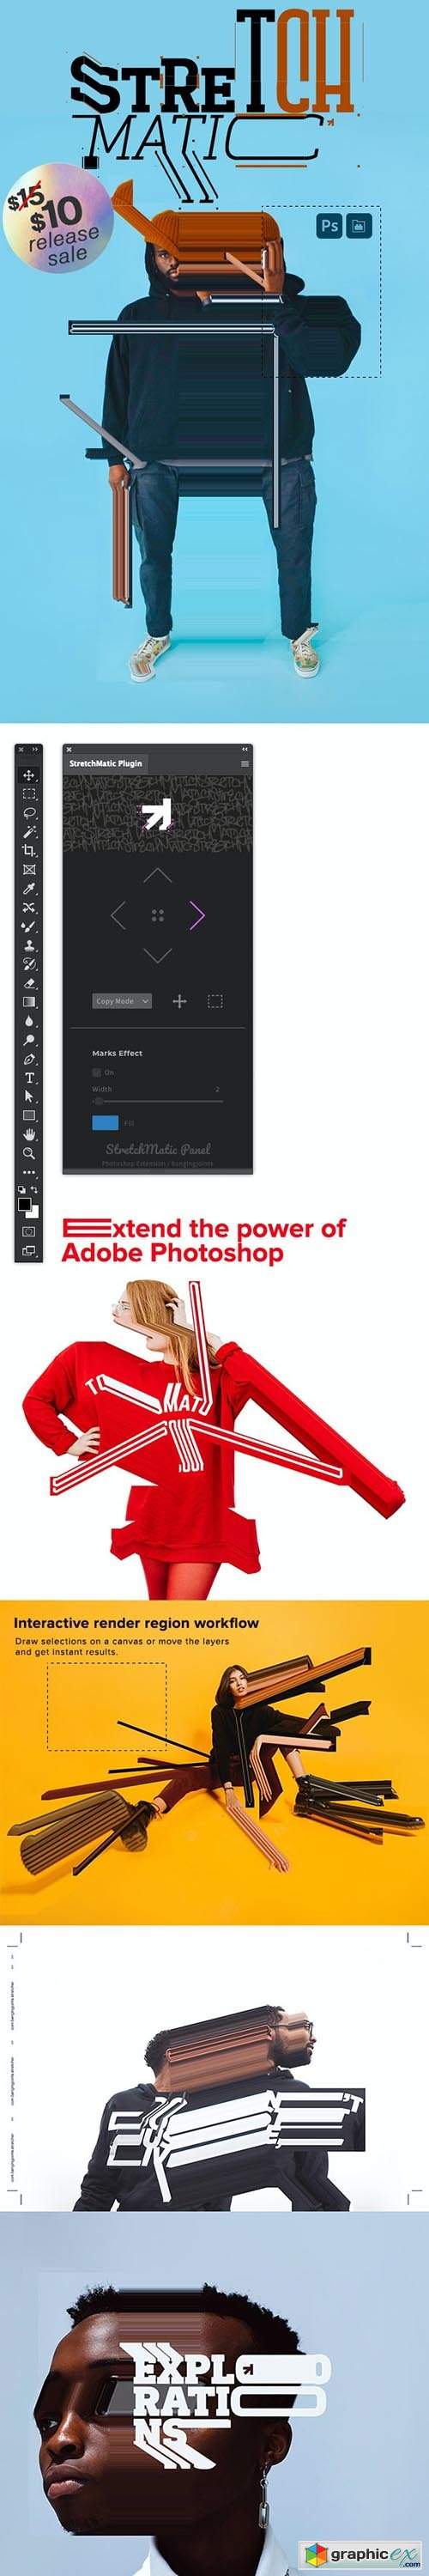 StretchMatic - Photoshop Plugin 